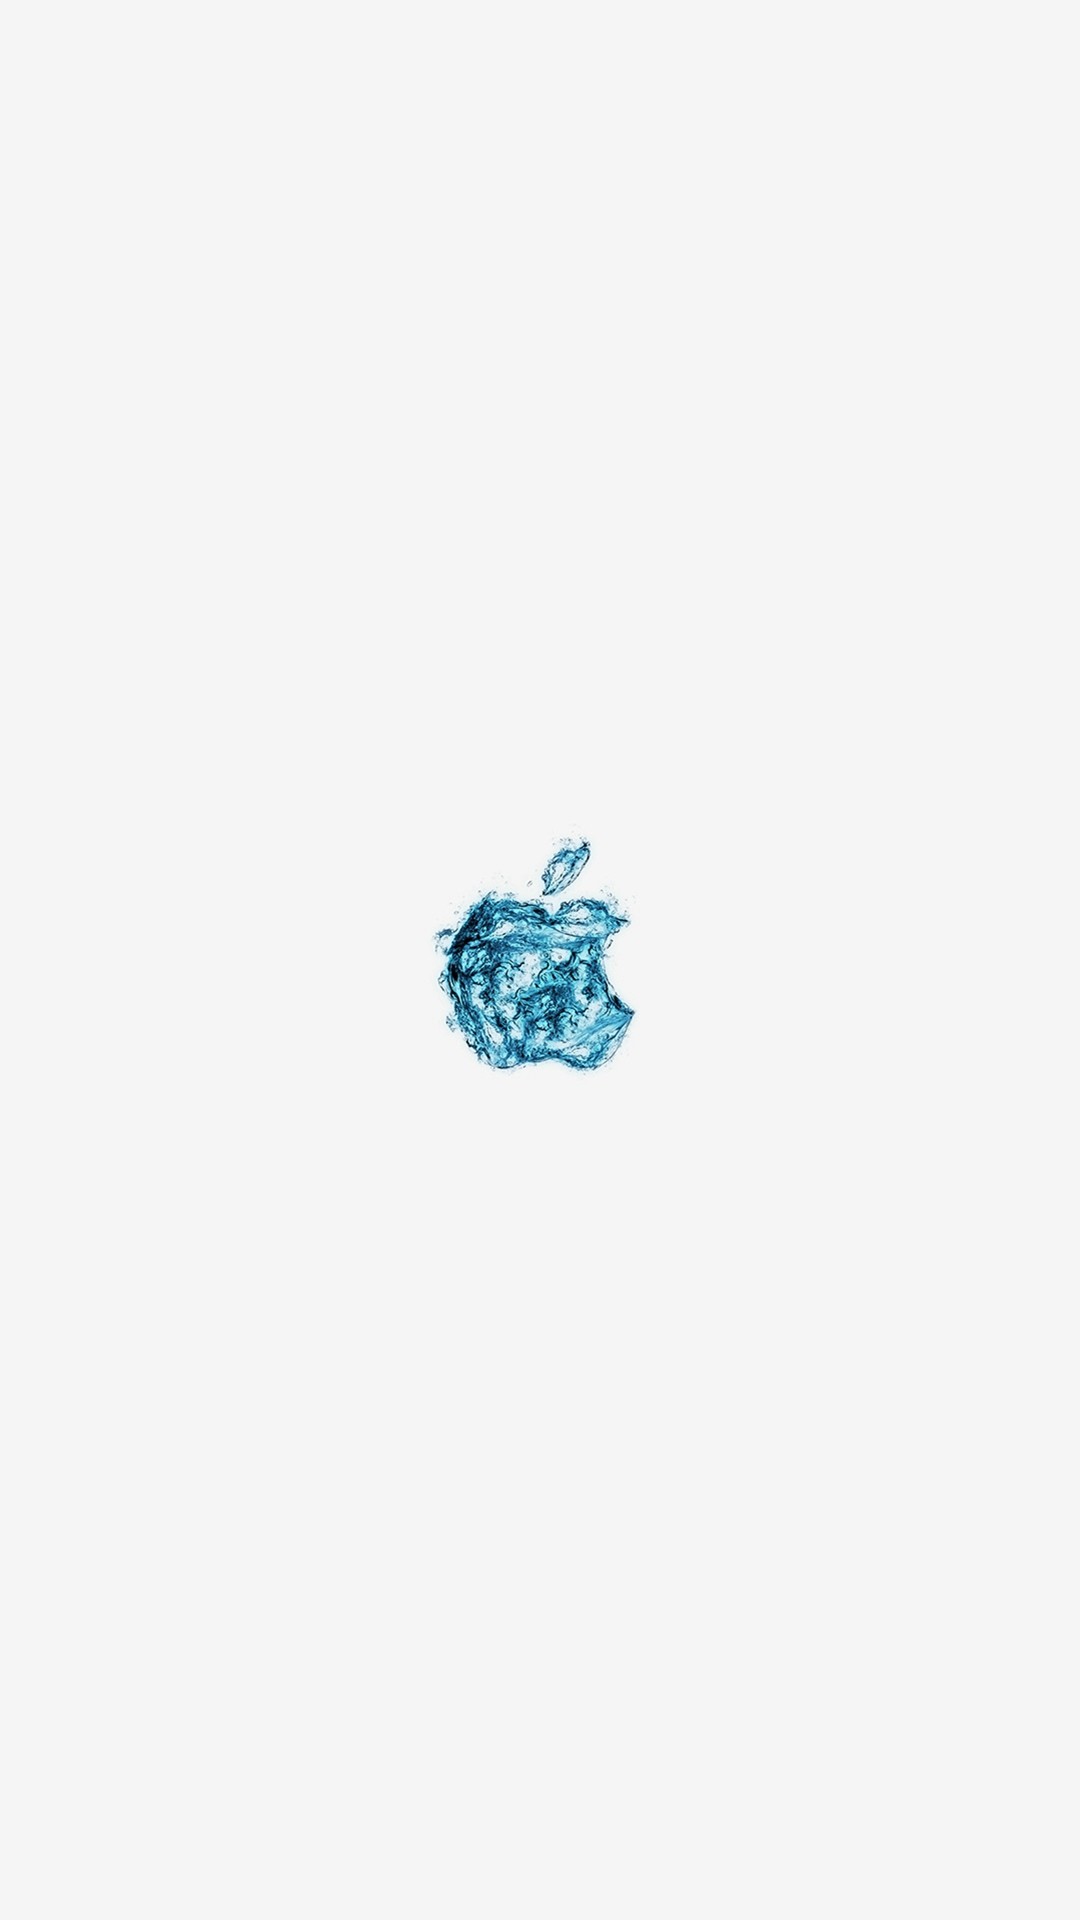 1080x1920 Apple Logo Water White Blue Art Illustration #iPhone #6 #wallpaper